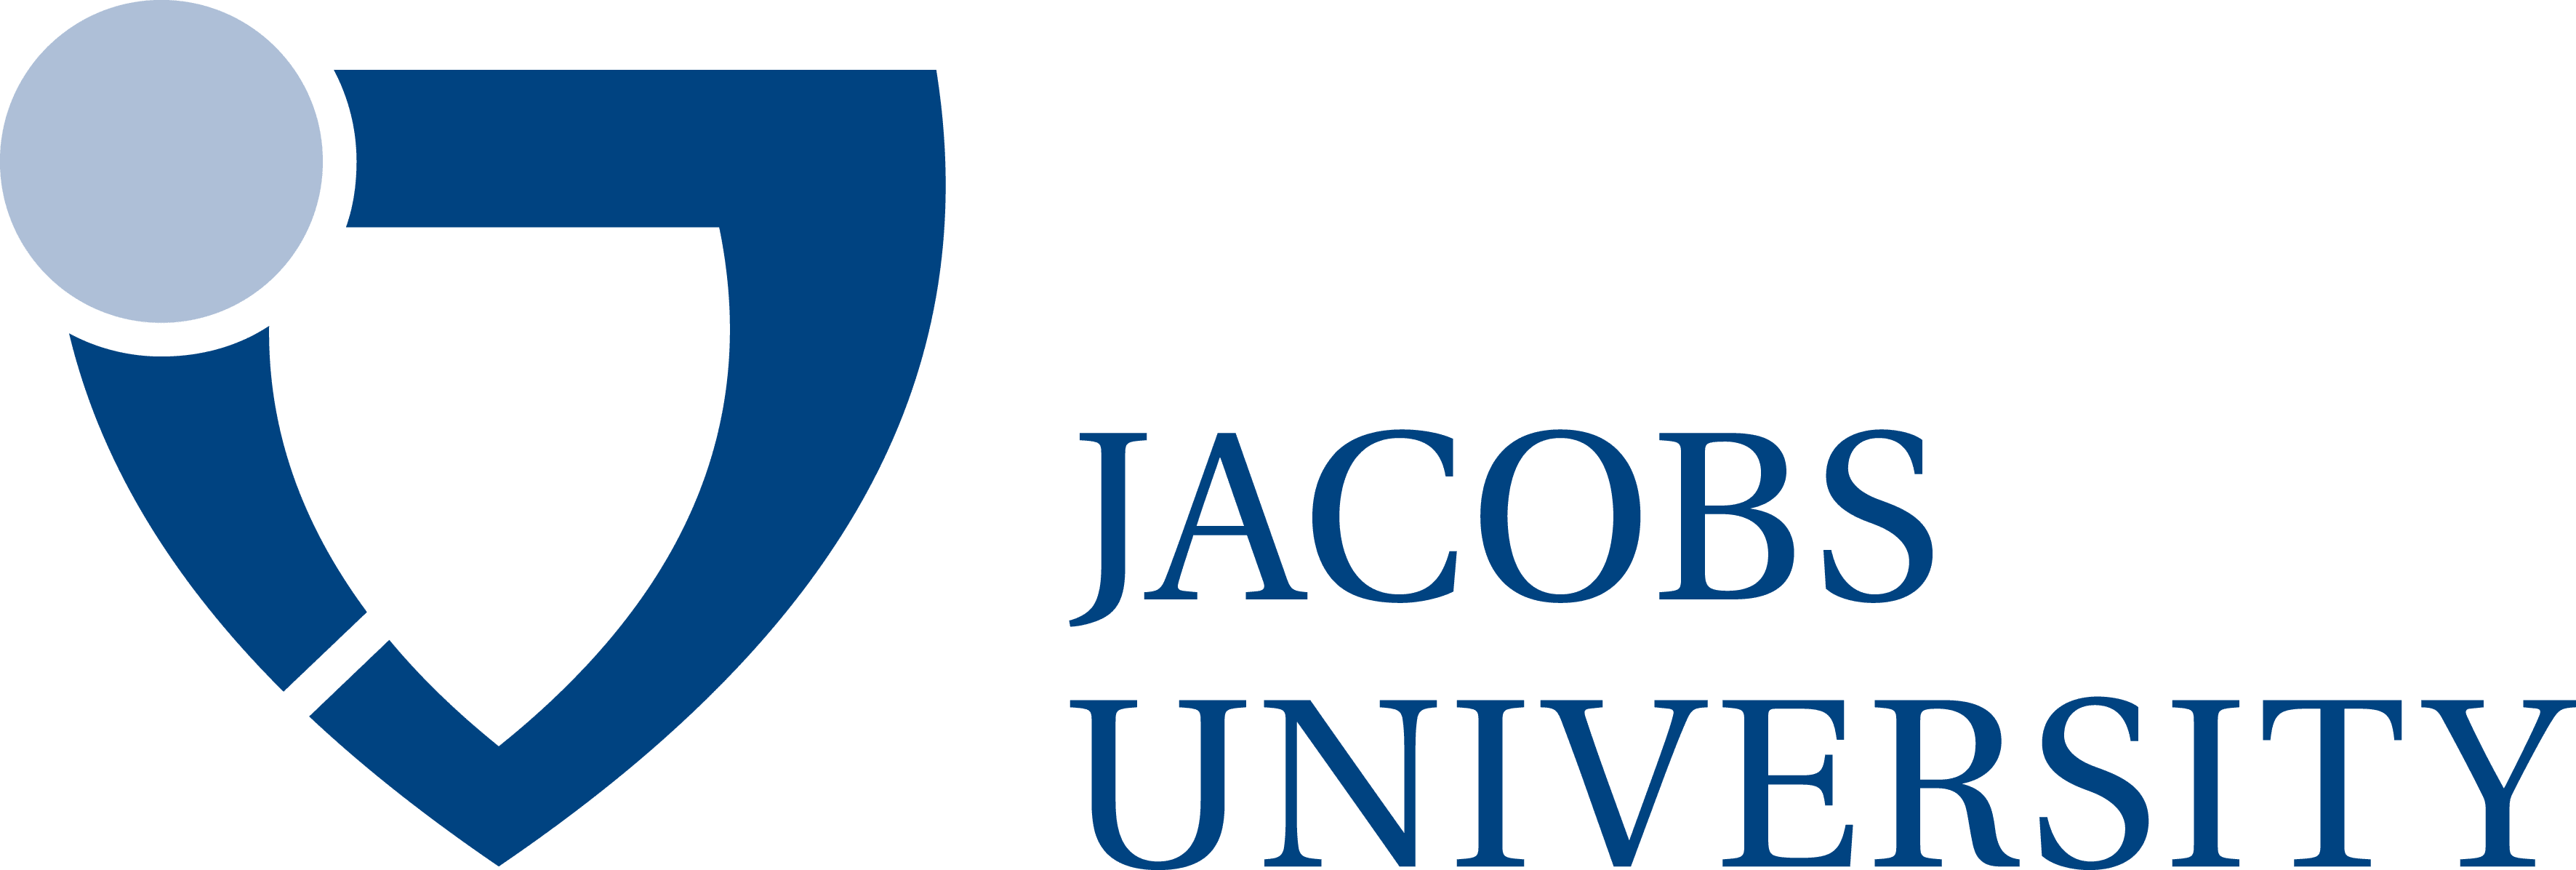 jacobs university logo